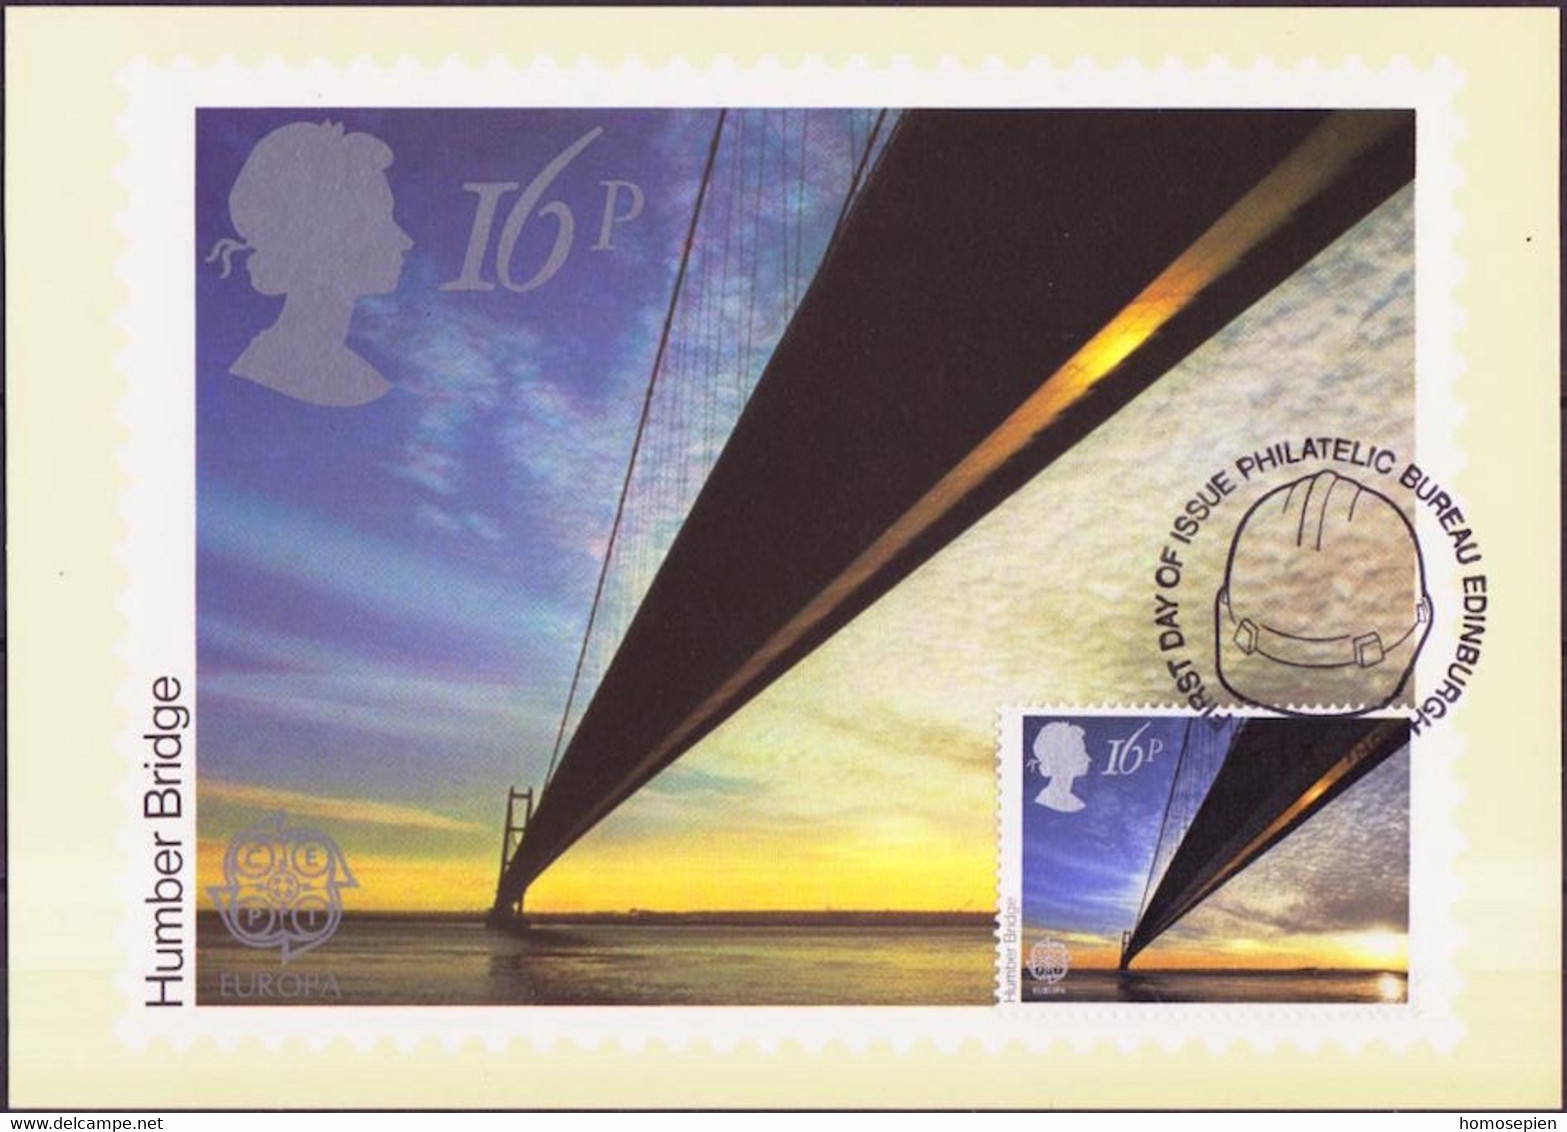 Grande Bretagne - Great Britain - Großbritannien CM 1983 Y&T N°1091 - Michel N°953 - 16p EUROPA - Maximumkarten (MC)